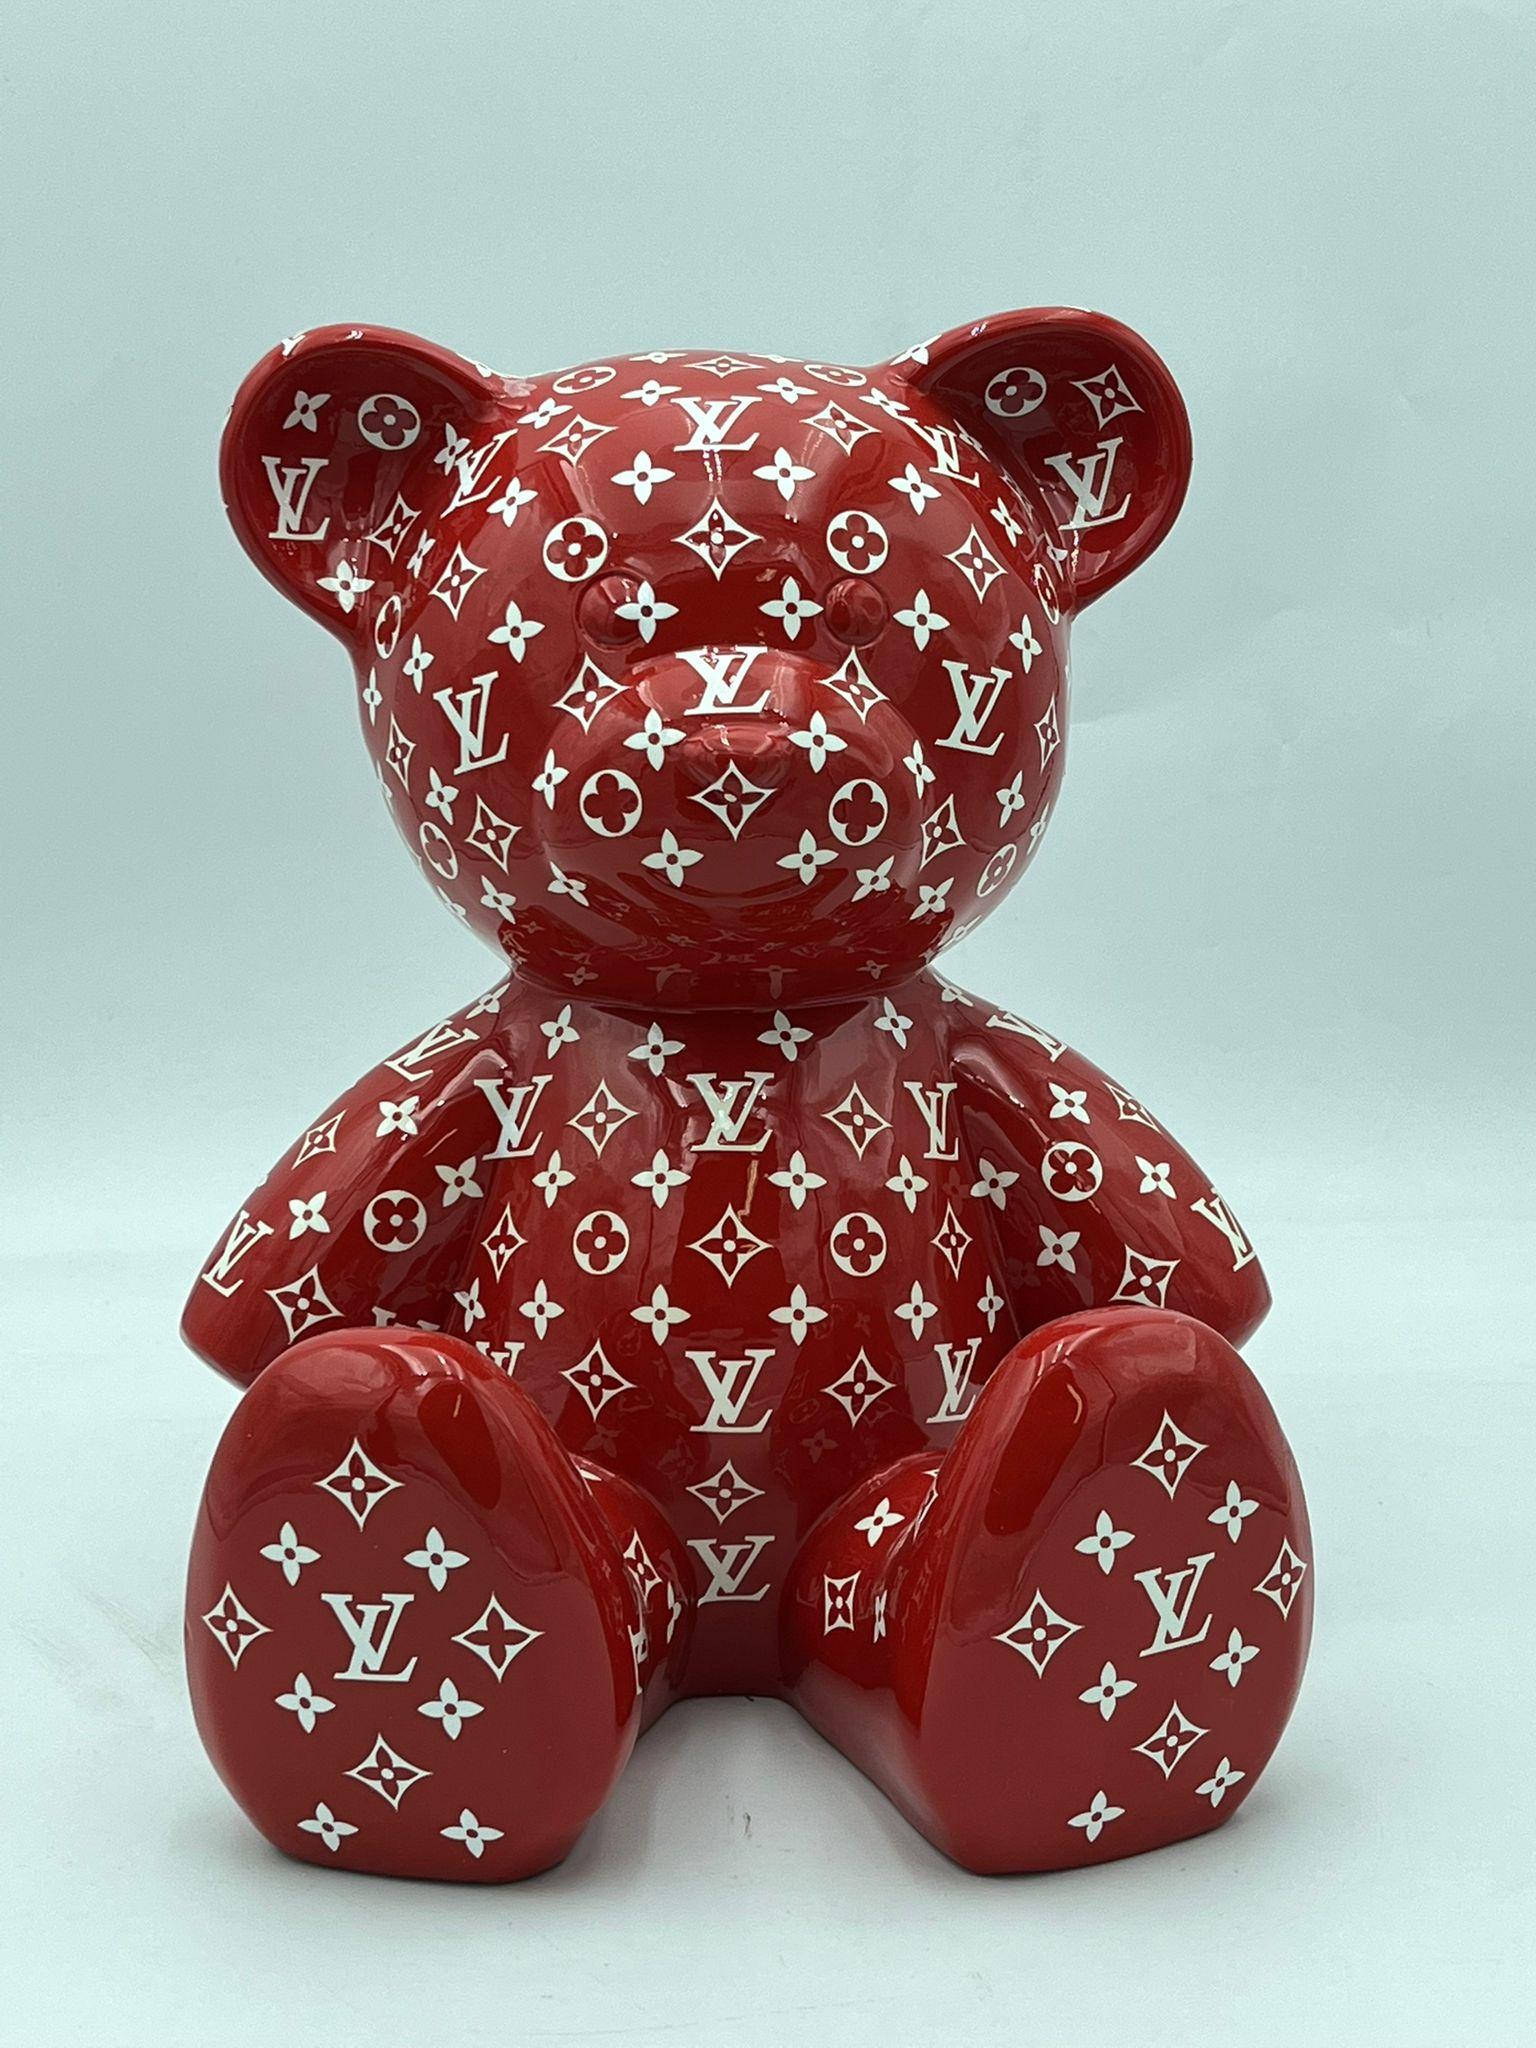 Naor Figurative Sculpture - 35 cm Teddy LV Tribute, Red